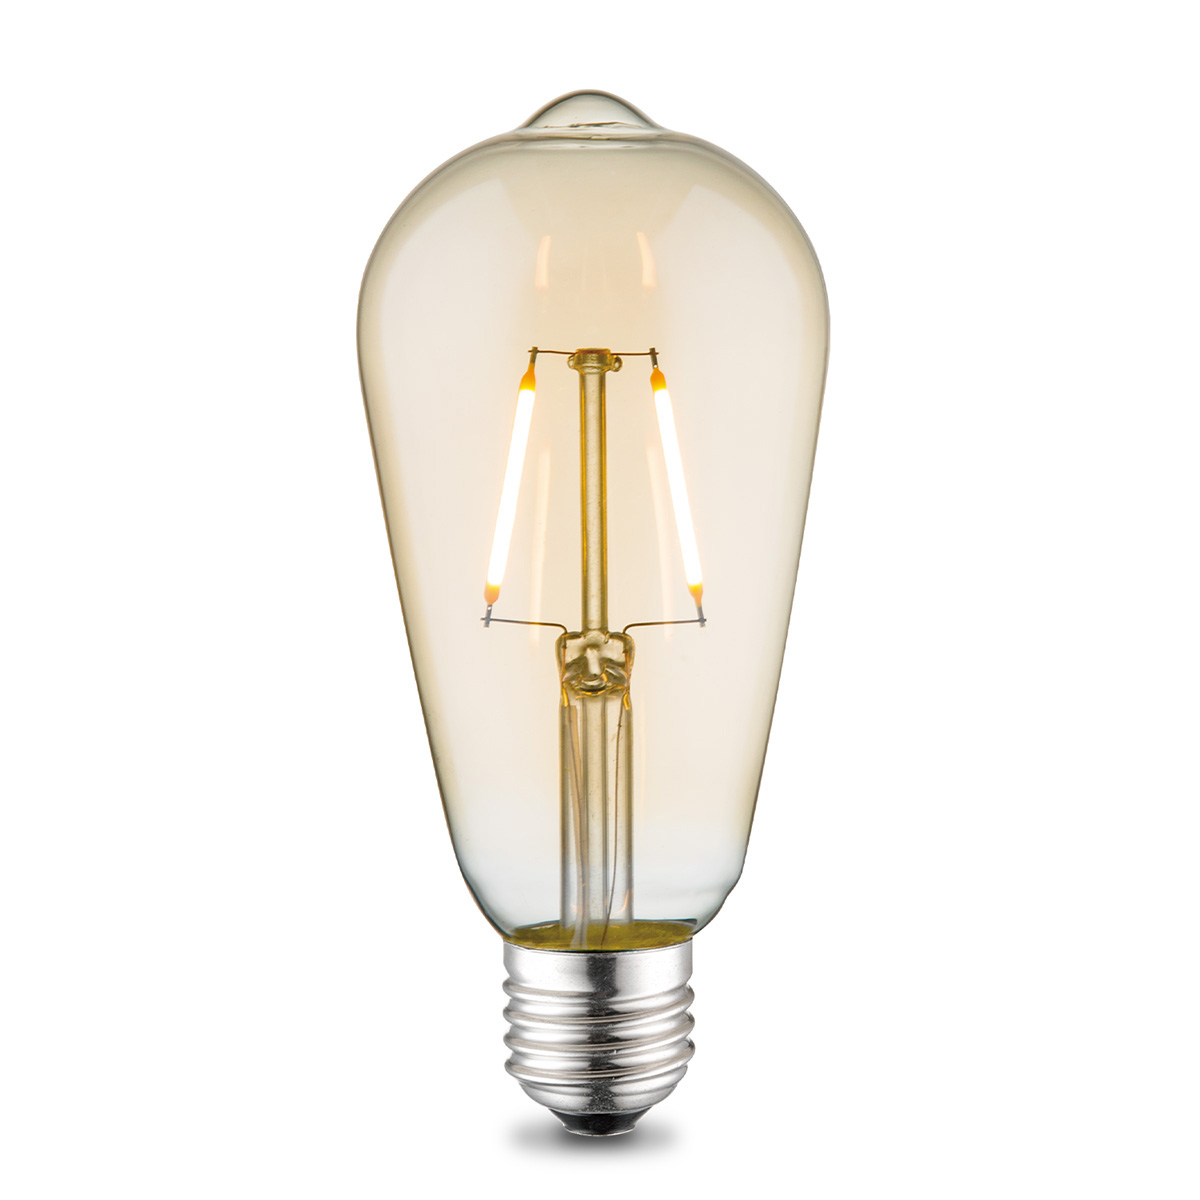 Tangla lighting - TLB-8001-02AM - LED Light Bulb Deco filament - ST64 2W amber - non dimmable - E27